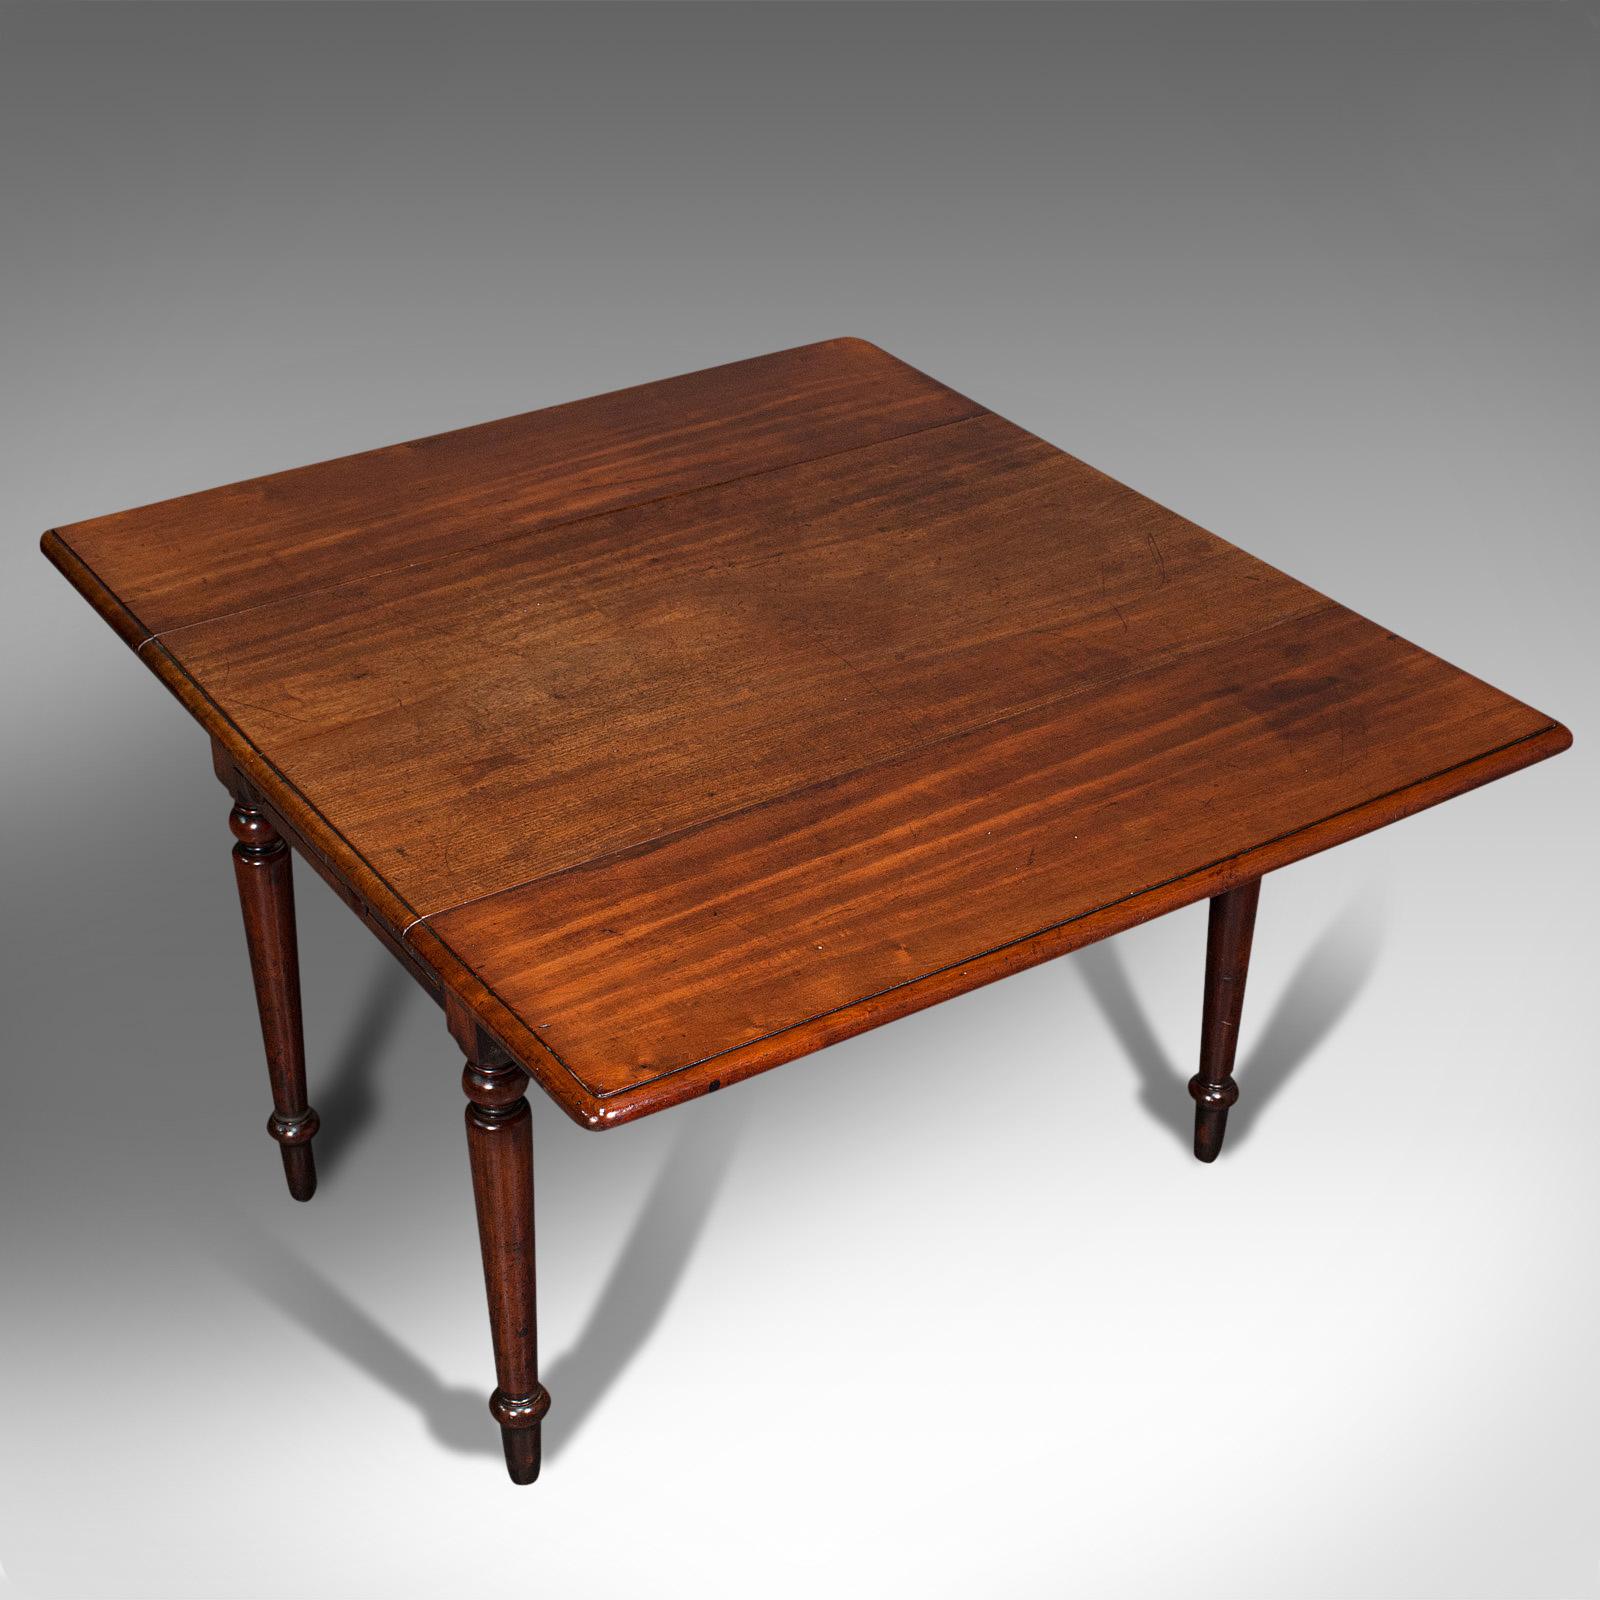 Antique Pembroke Table, English, Mahogany, Extending, Dining, Regency, C.1820 For Sale 3